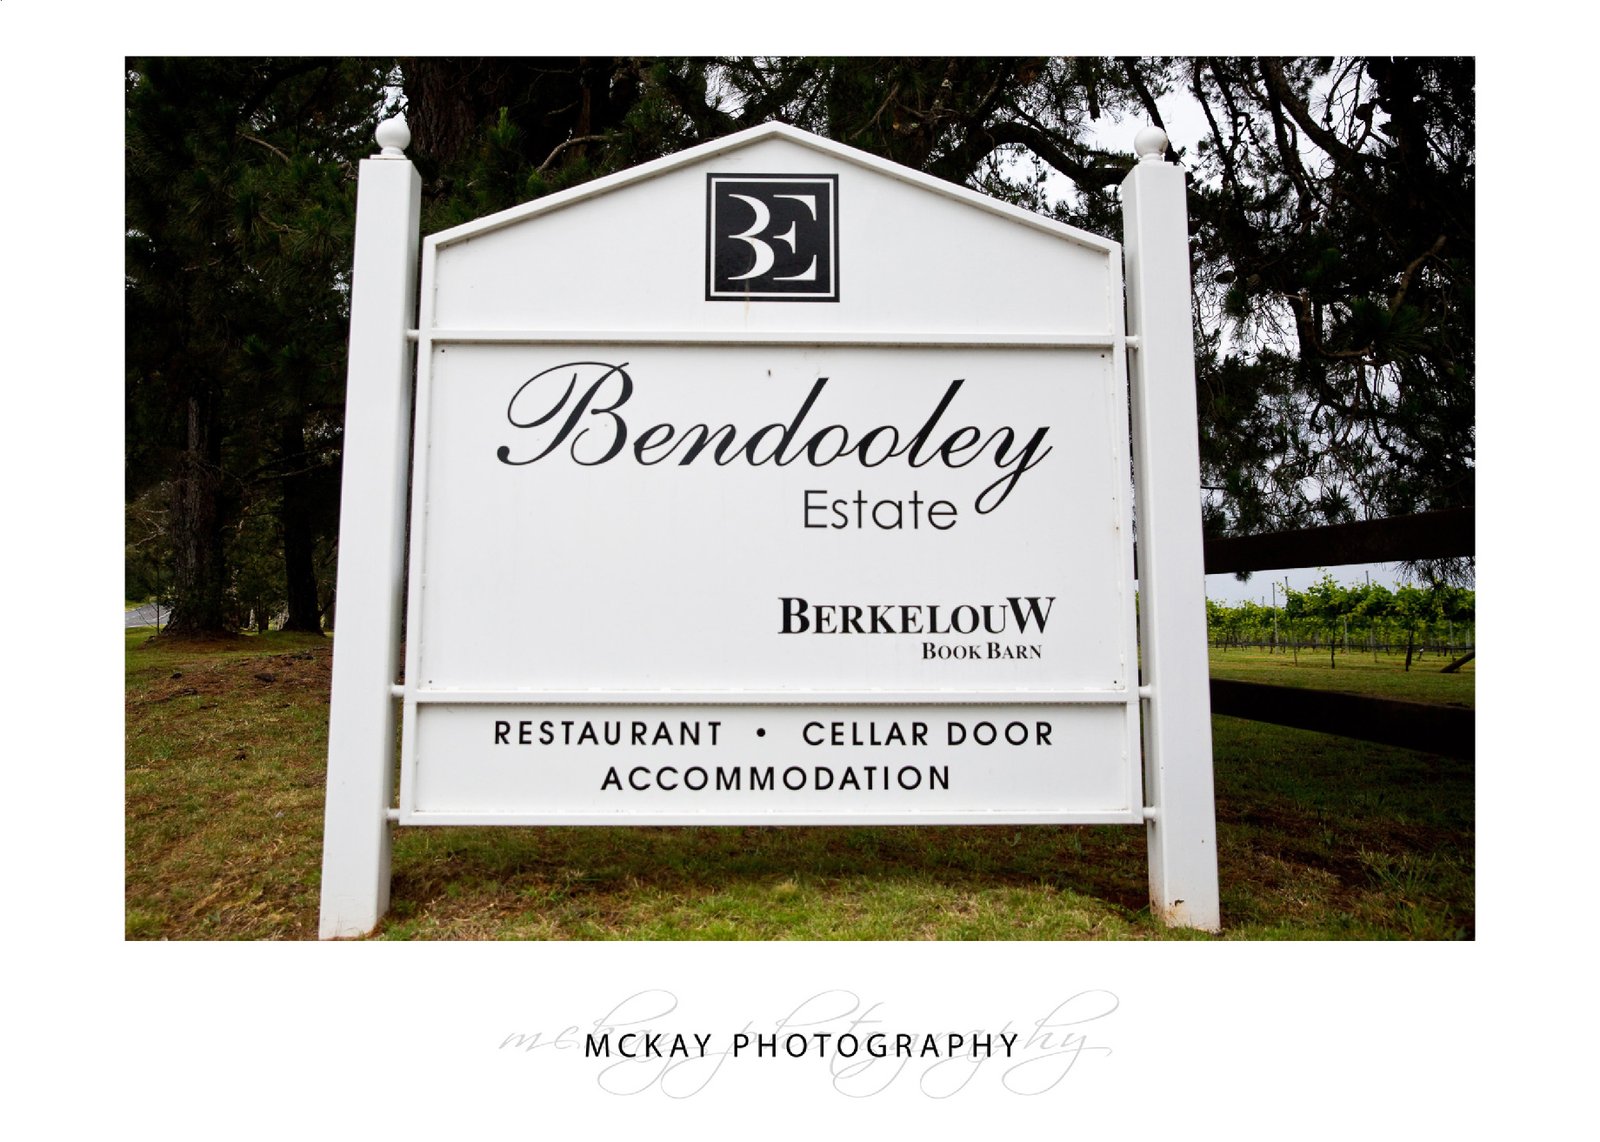 Bendooley Estate wedding venue in the Southern Highlands